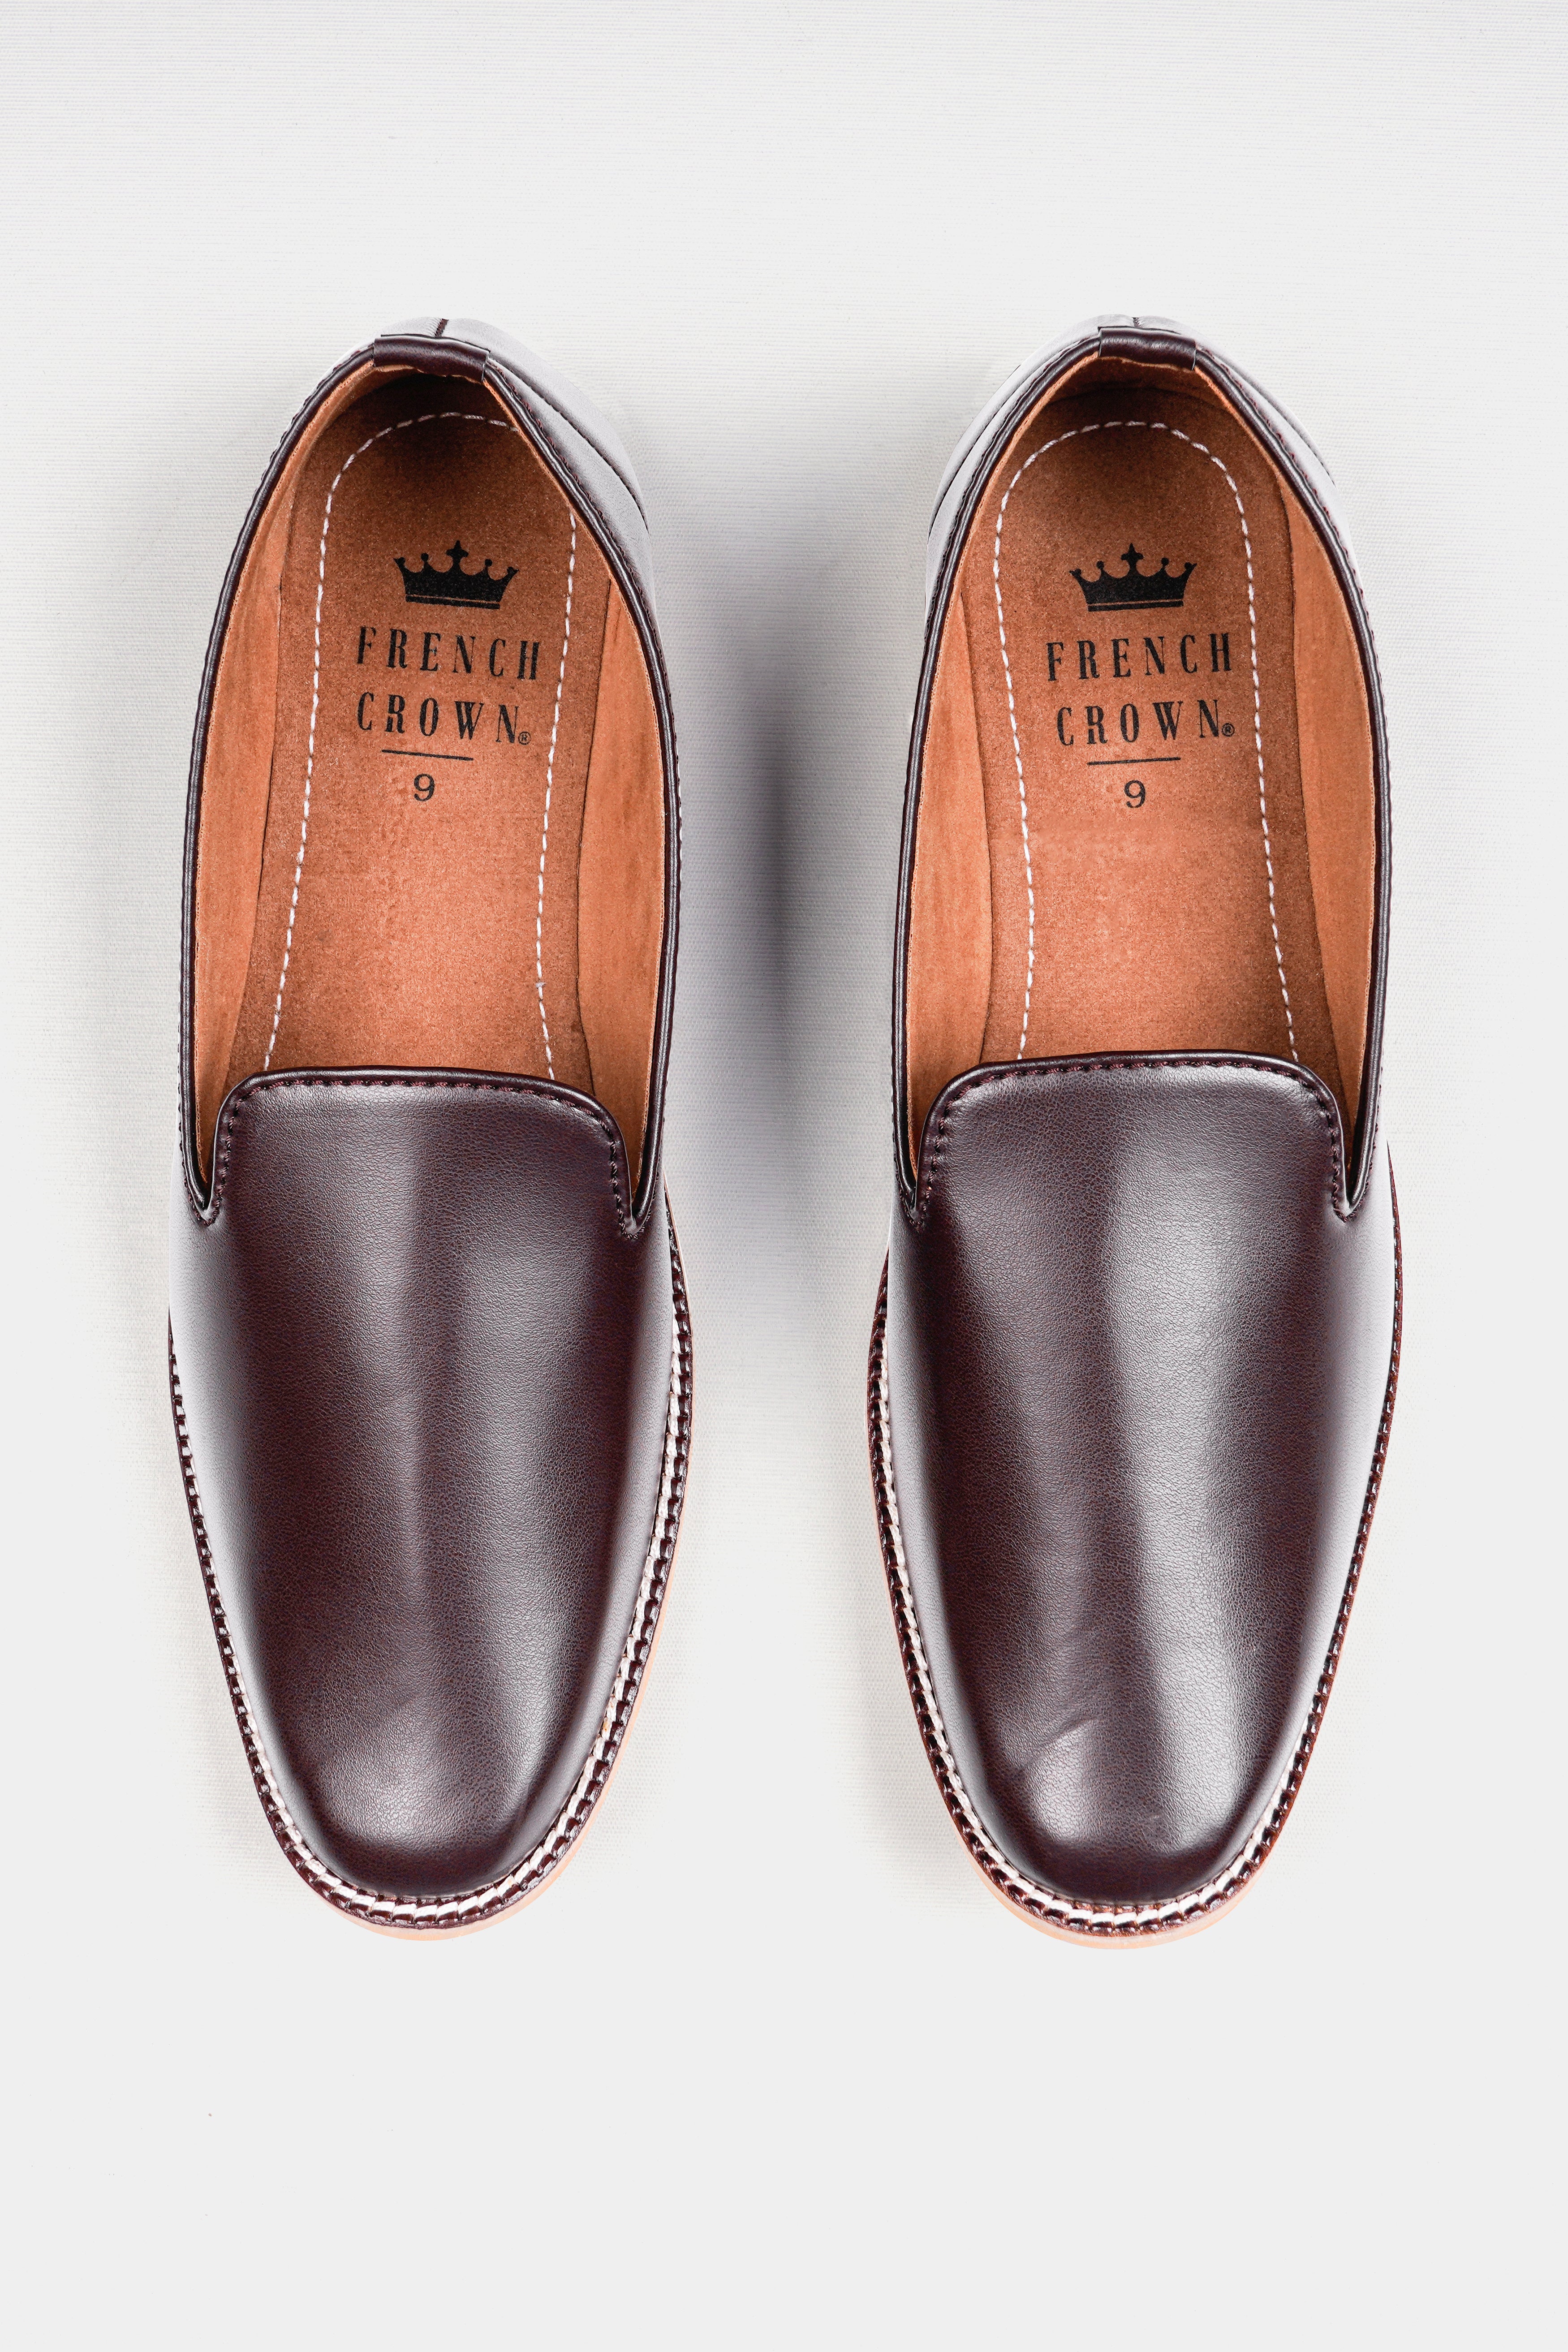 Dark Brown Vegan Leather Hand Stitched Mojri Slip-On Shoes FT146-6, FT146-7, FT146-8, FT146-9, FT146-10, FT146-11